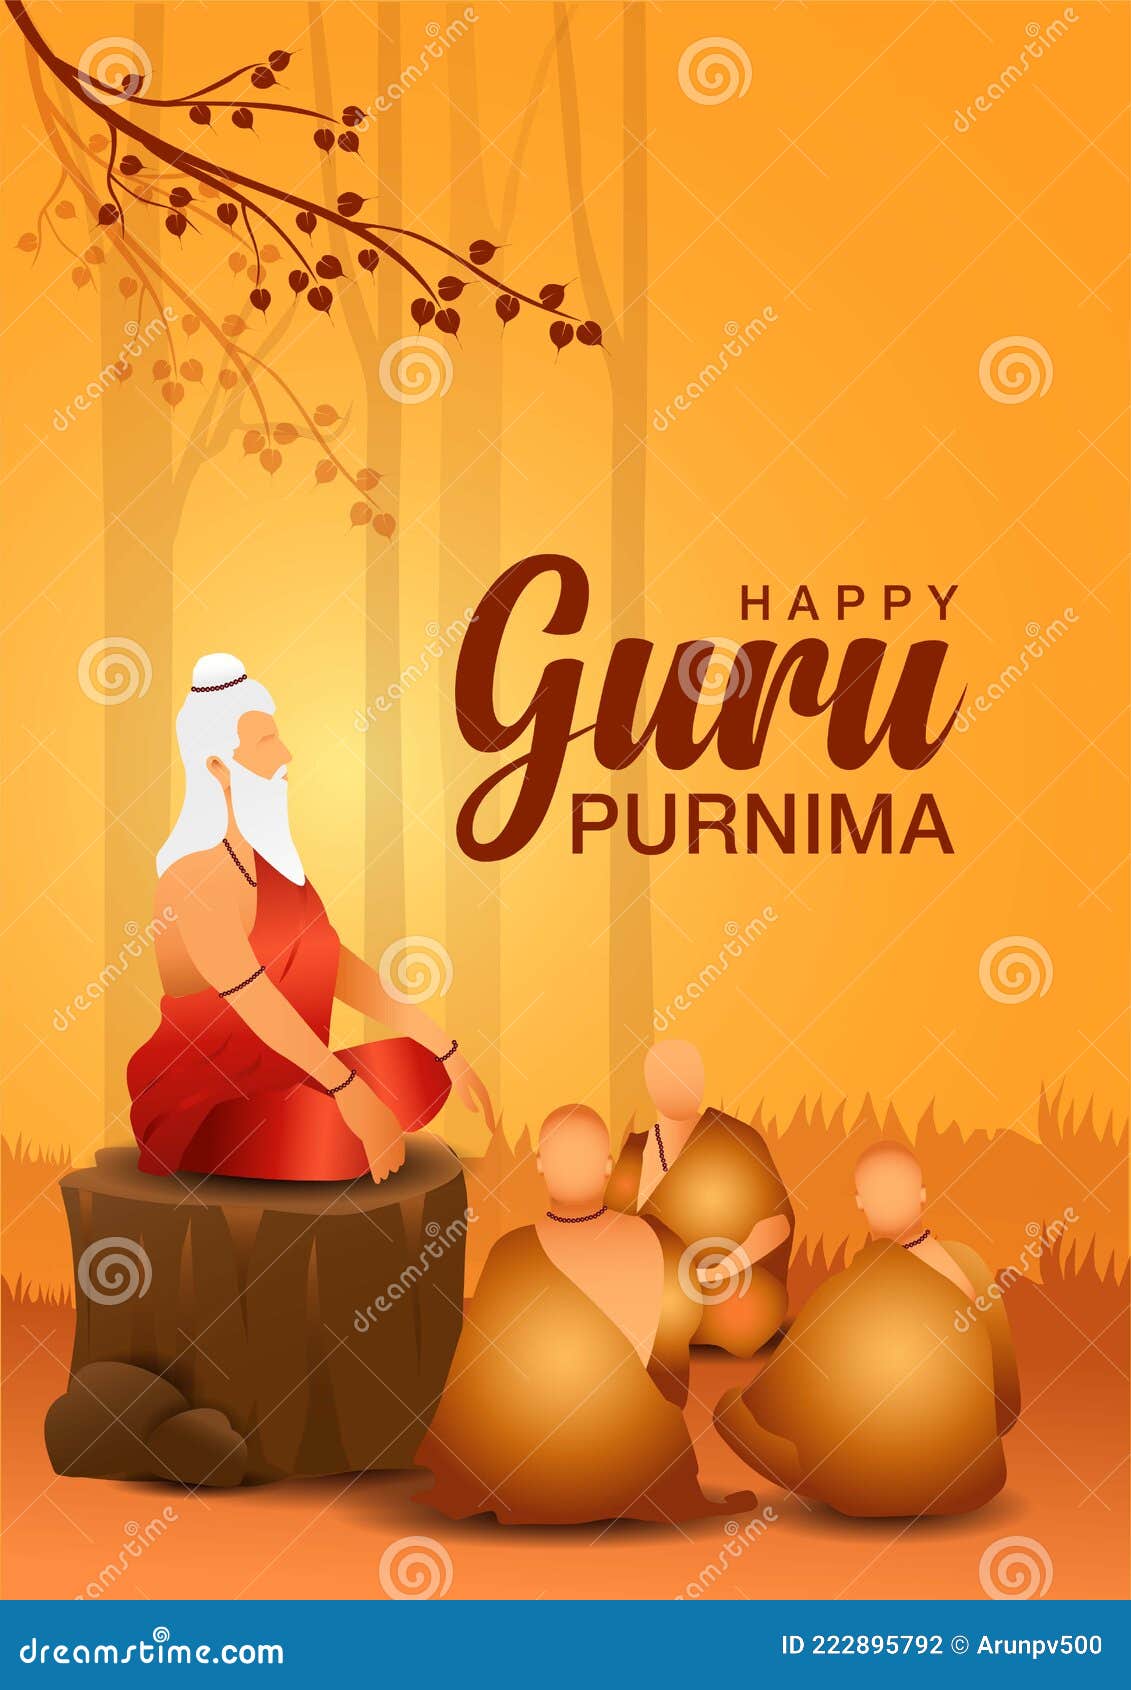 Creative Vector Illustration for the Day of Honoring Celebration Guru  Purnima Stock Vector - Illustration of buddha, drawing: 222895792